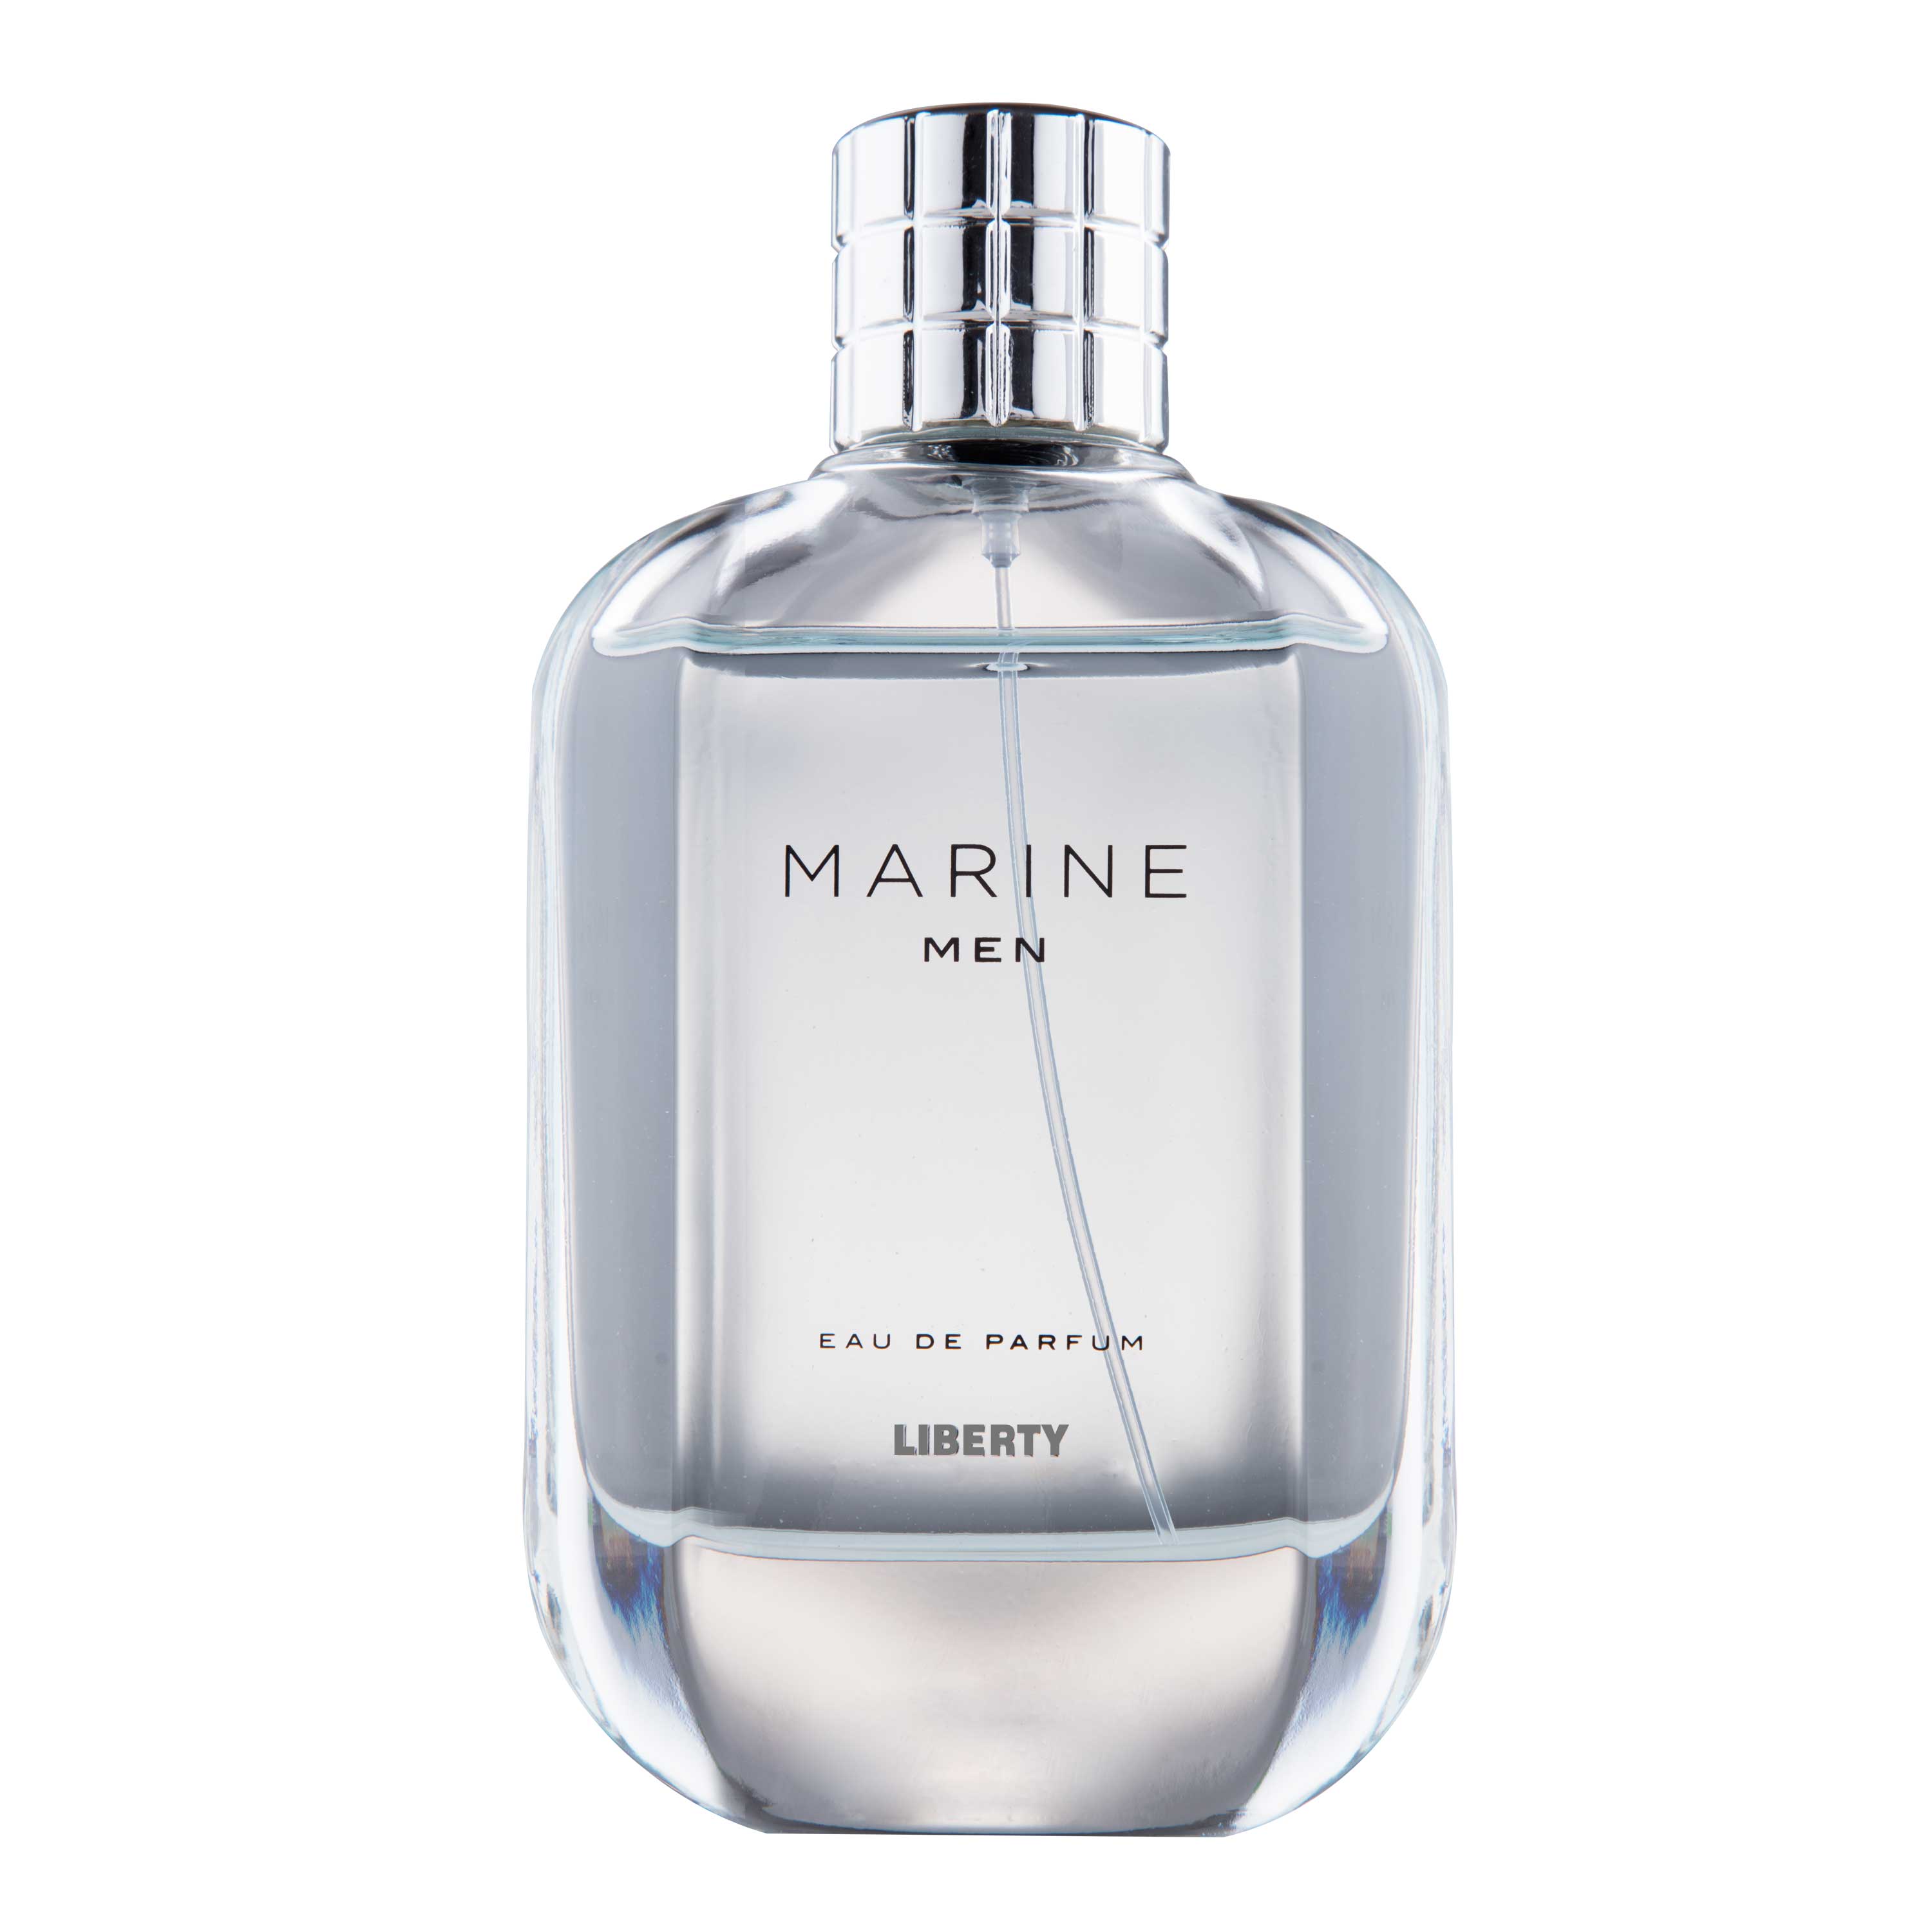 MARINE MEN - Eau De Perfume from LIBERTY LIFESTYLE